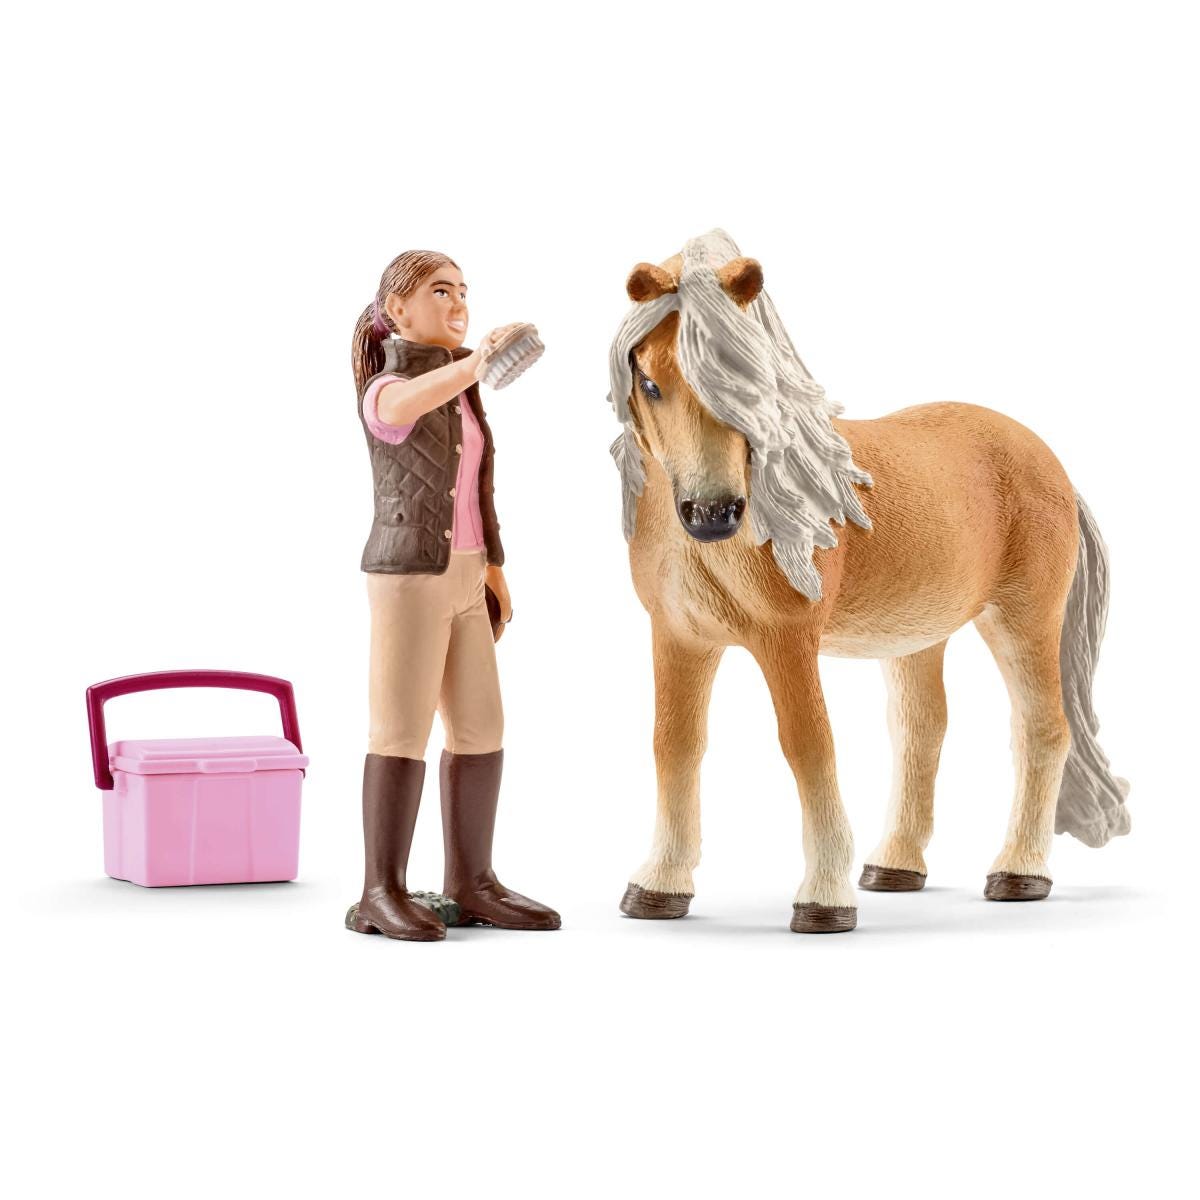 Groom with Icelandic pony mare